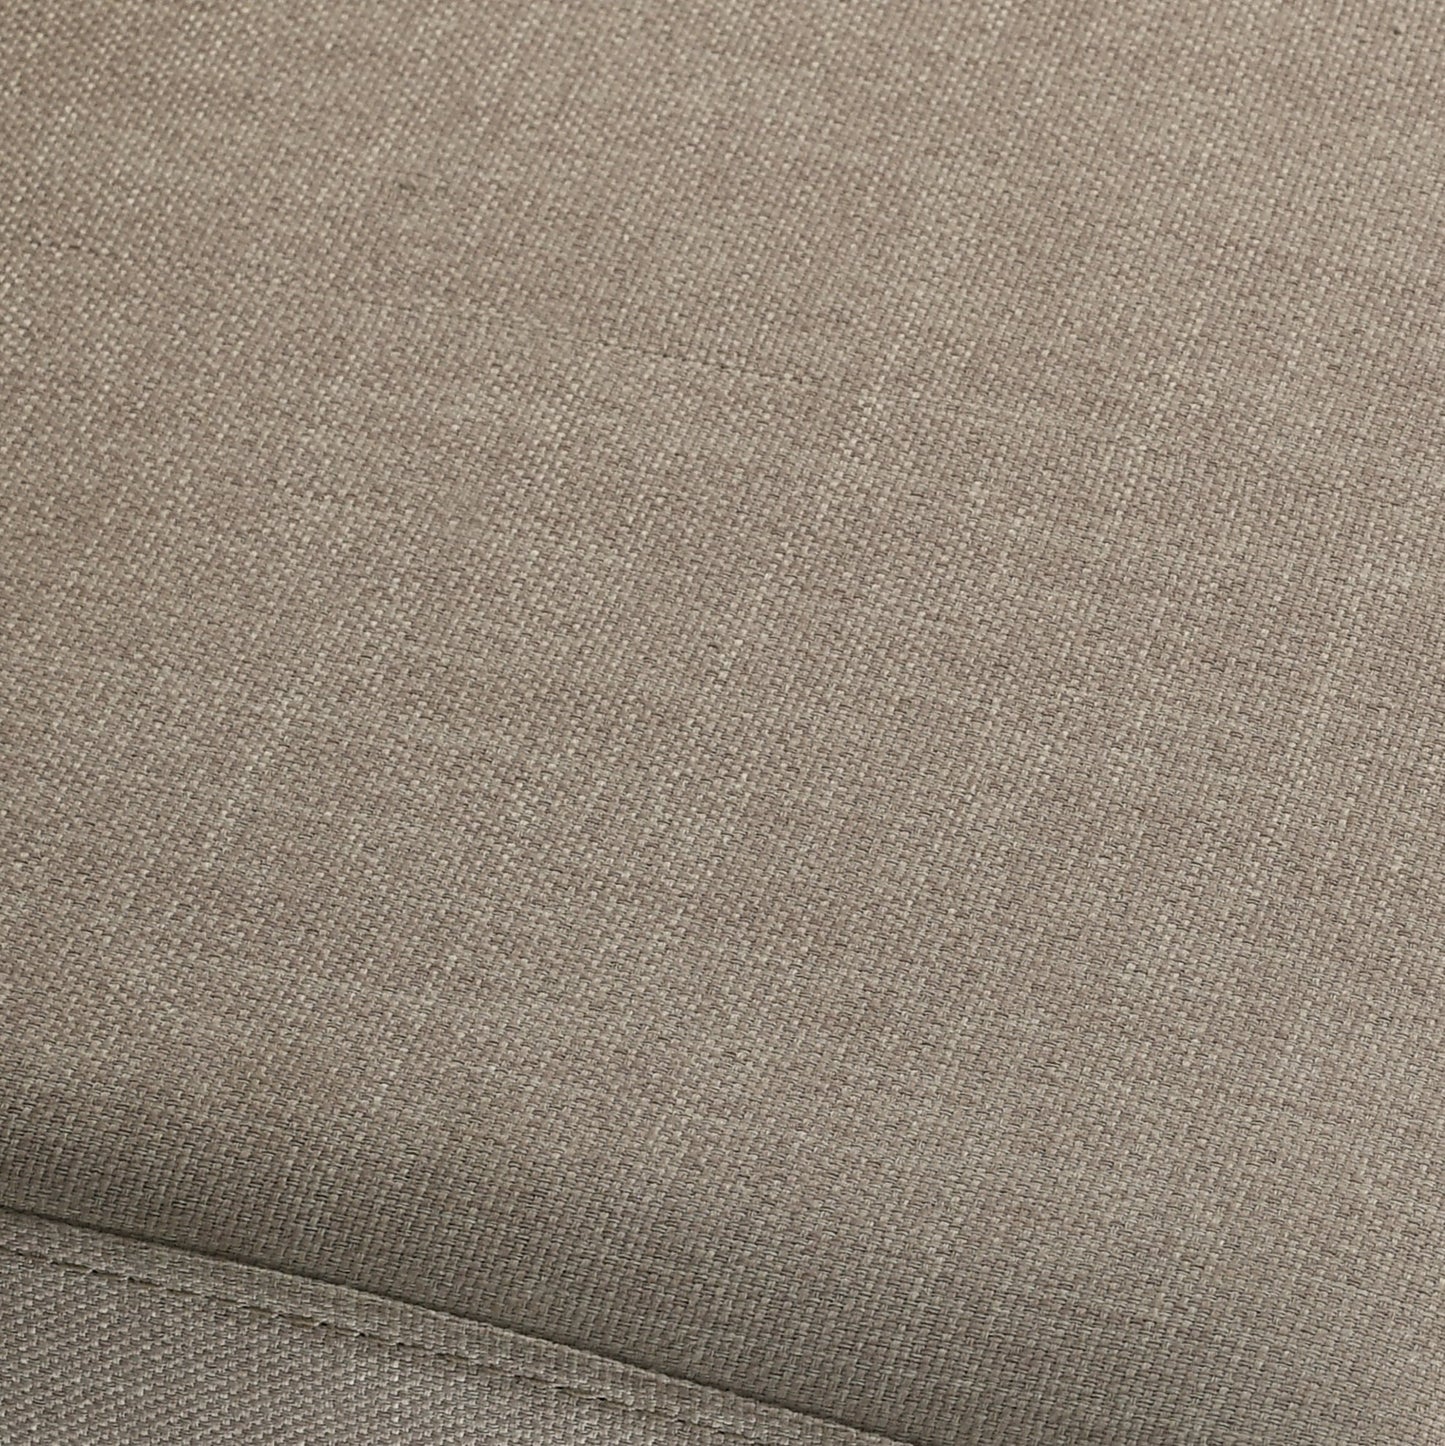 Breda Antique Gray Finish Upholstered Nailhead Bench